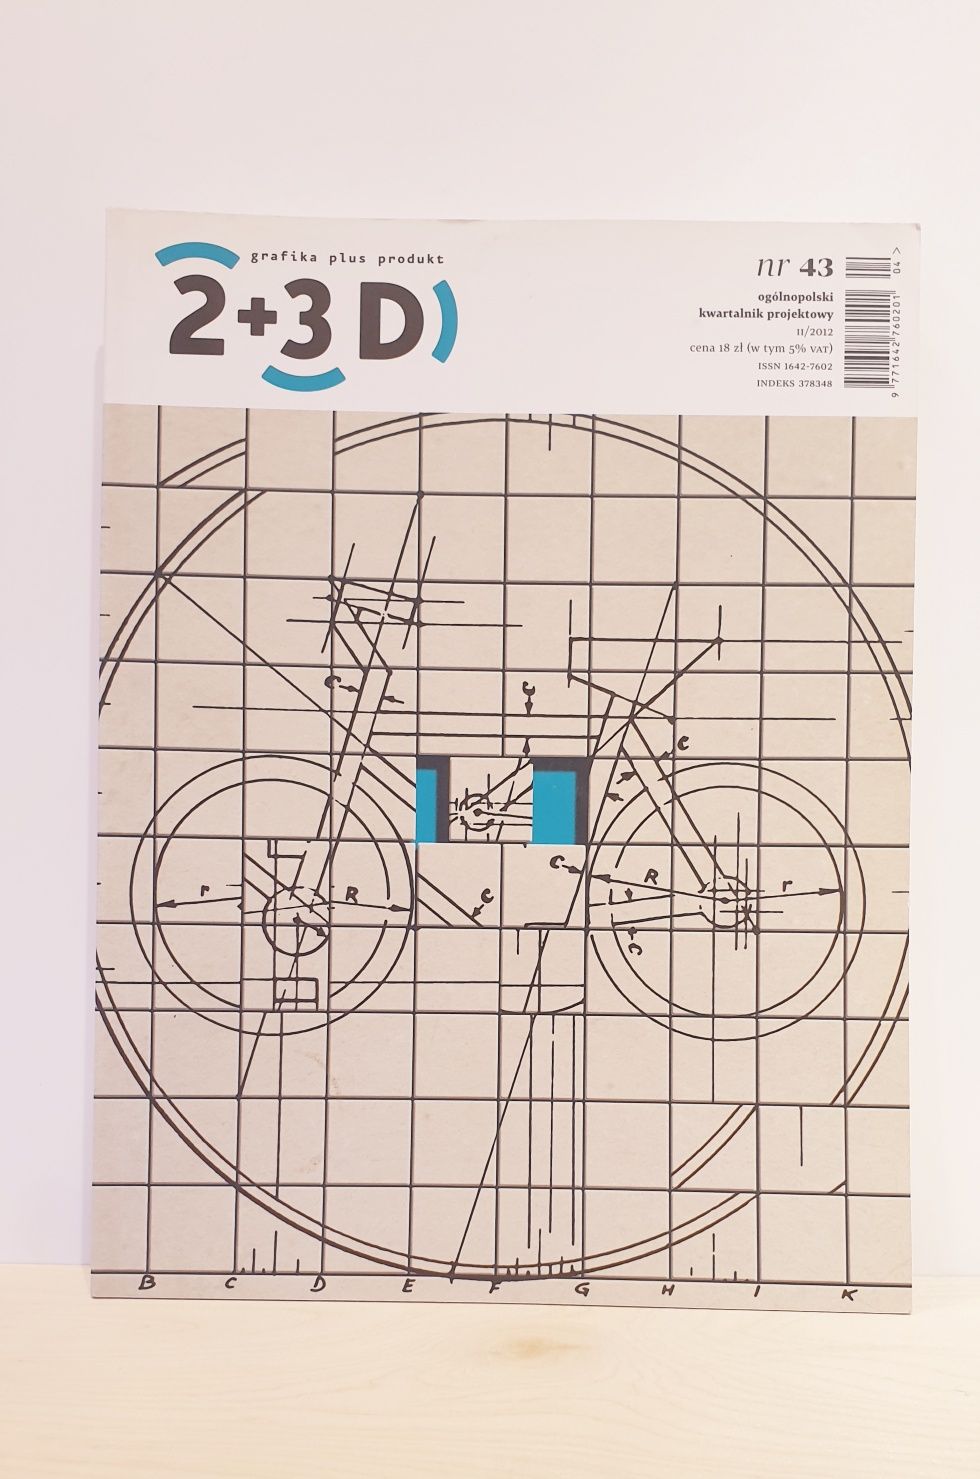 Grafika plus produkt czasopismo kwartalnik 2 + 3d